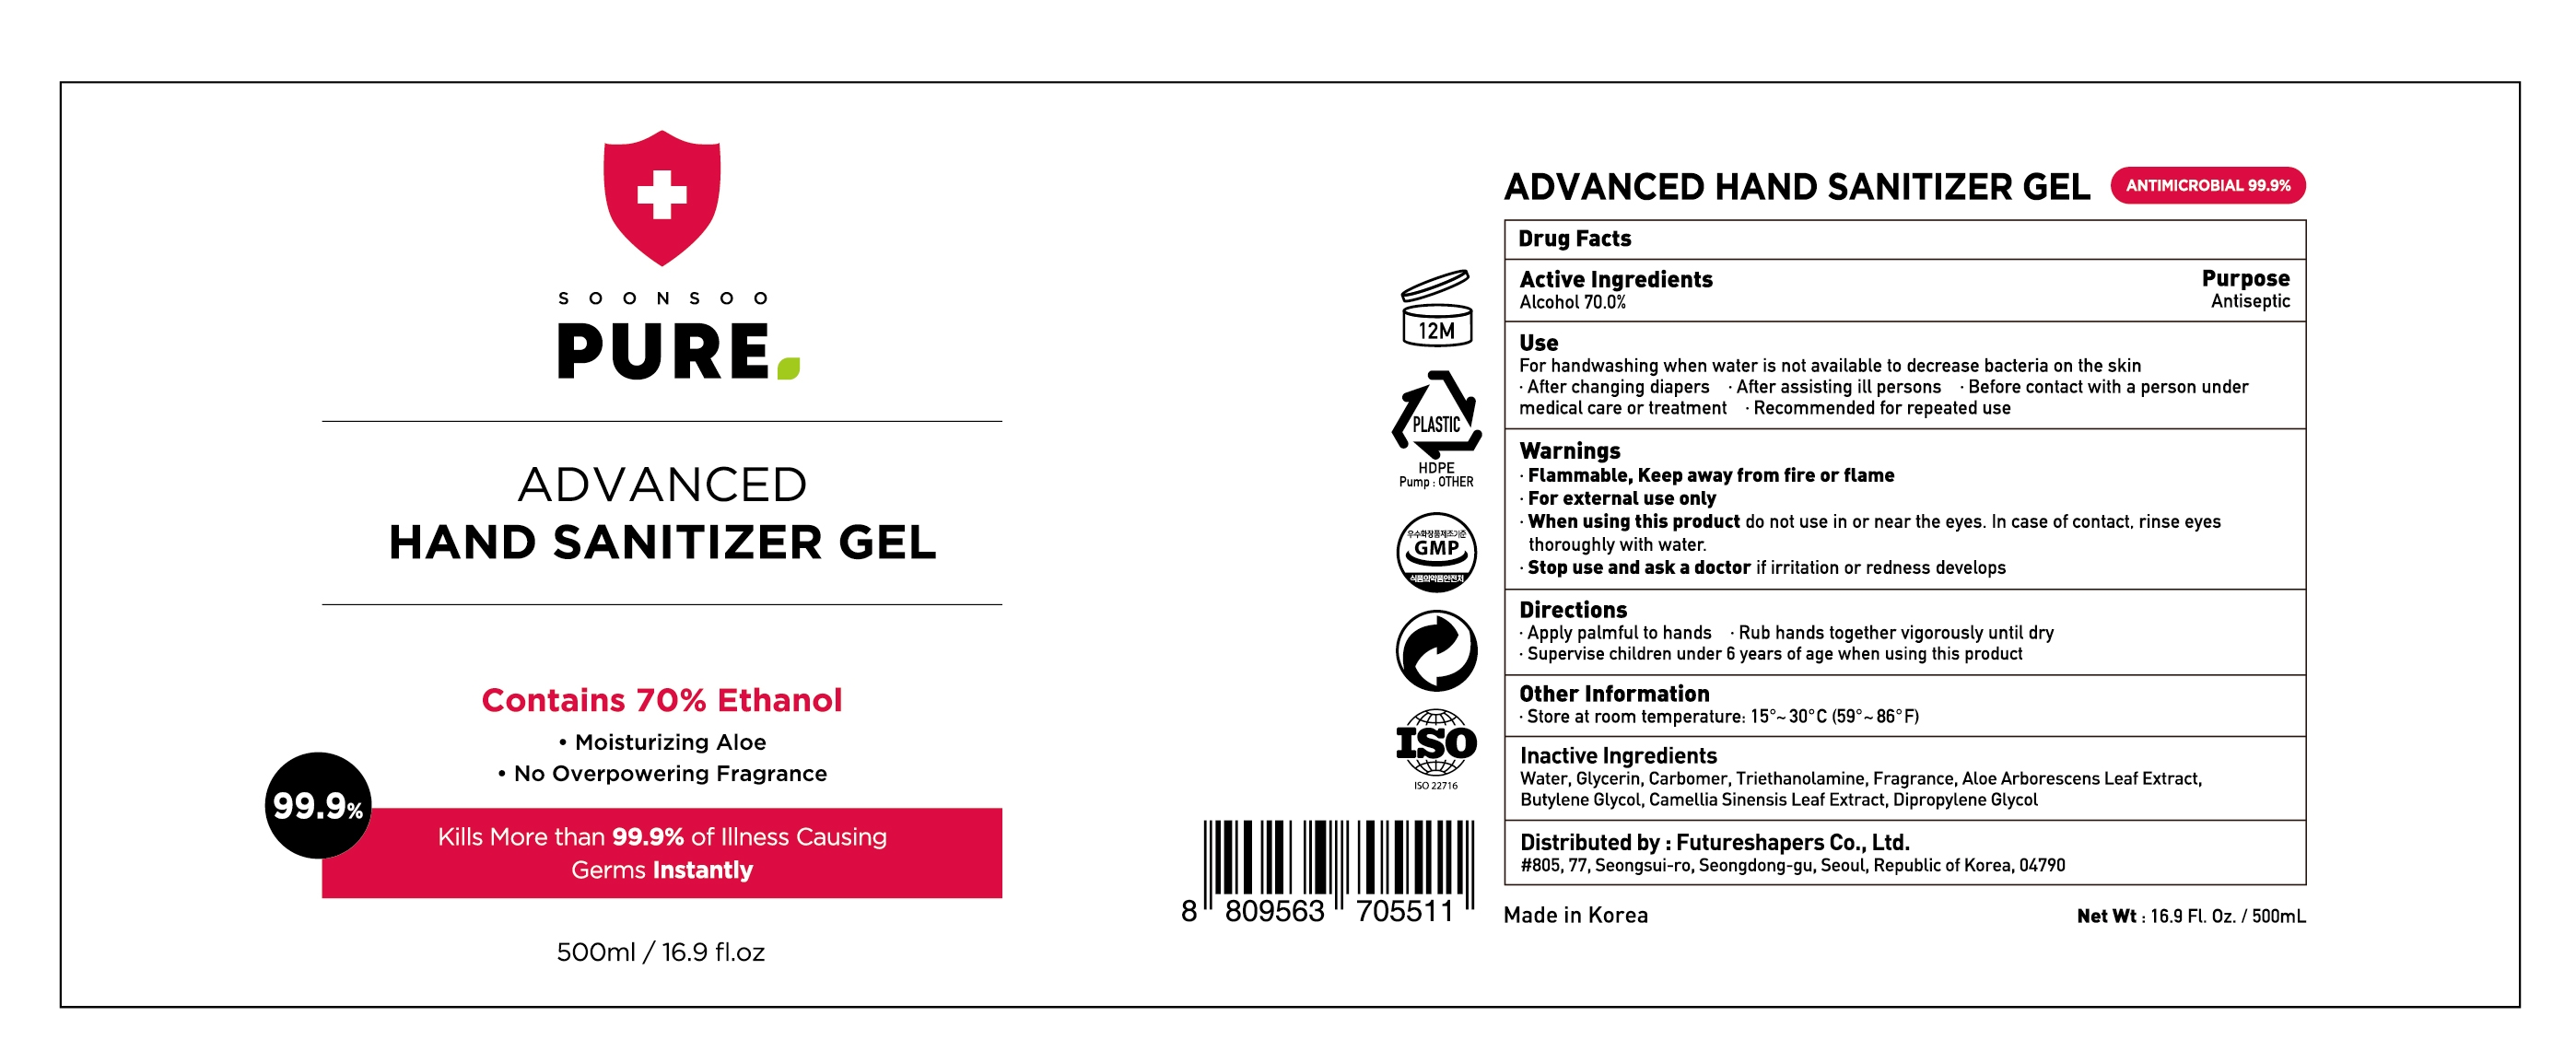 Soonsoo Pure Advanced Hand Sanitizer Gel